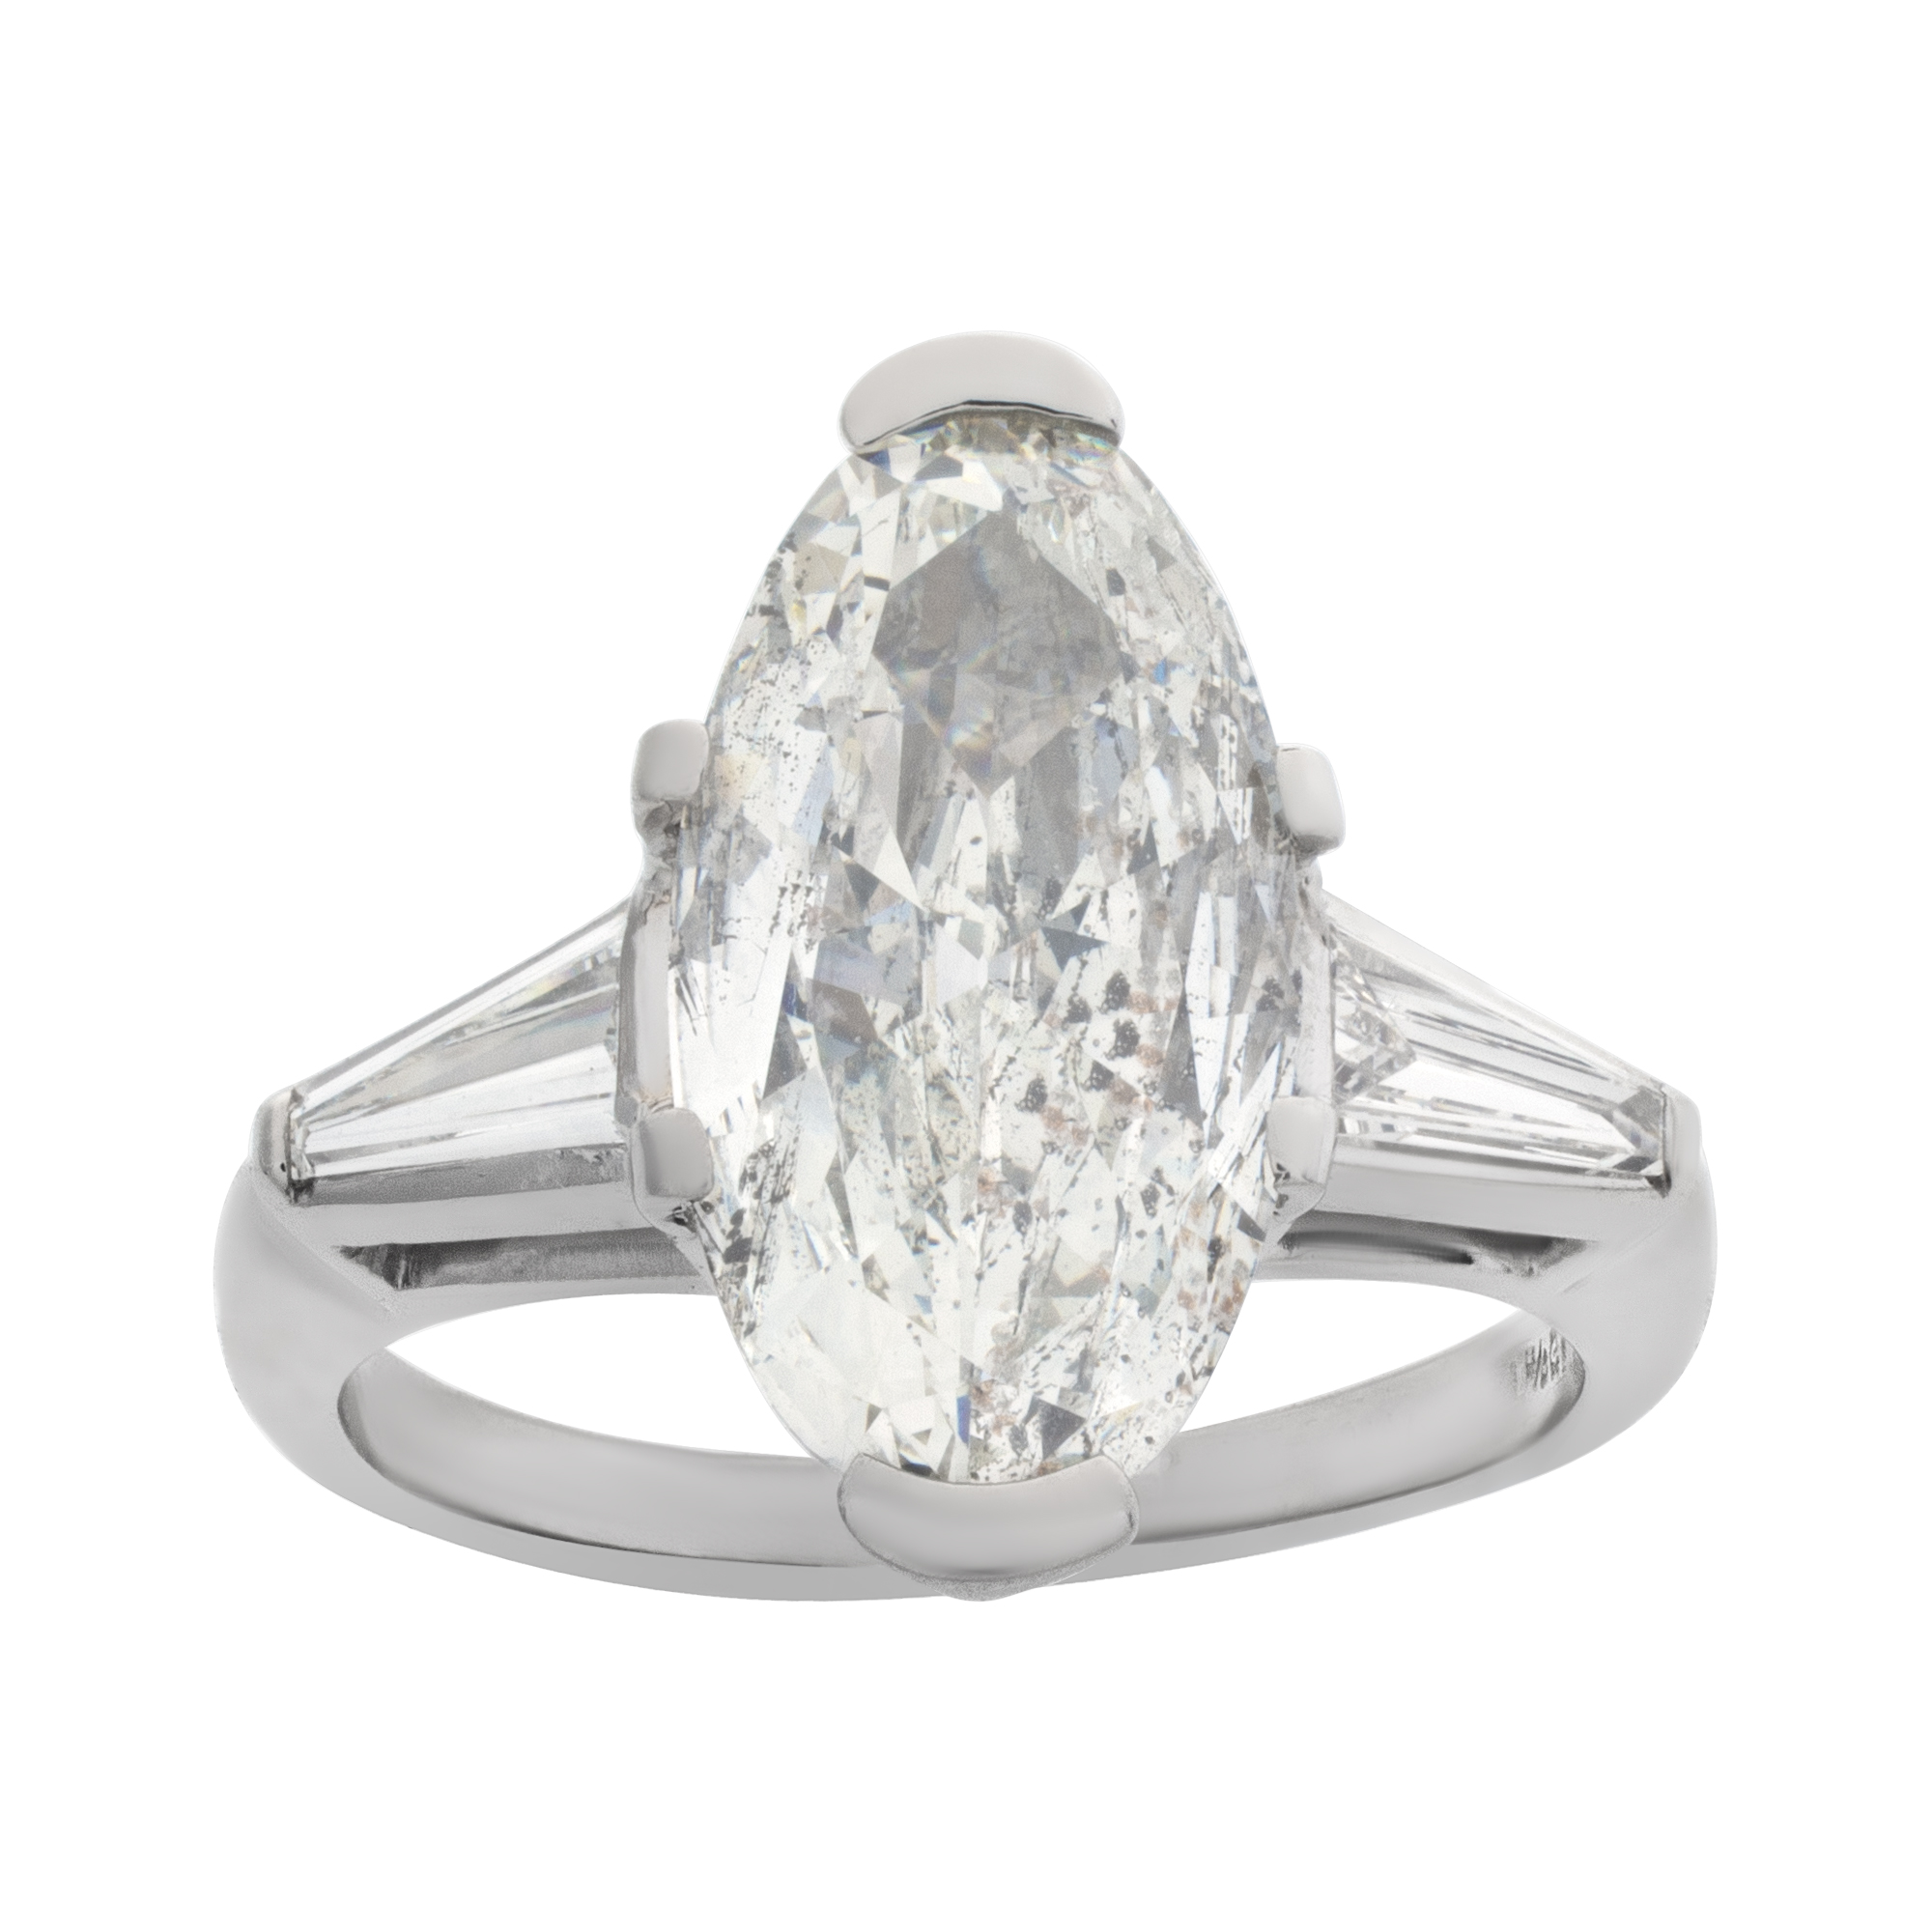 GIA certified oval brilliant cut diamond 2.73 carat (J color, I1 clarity) set in platinum image 1